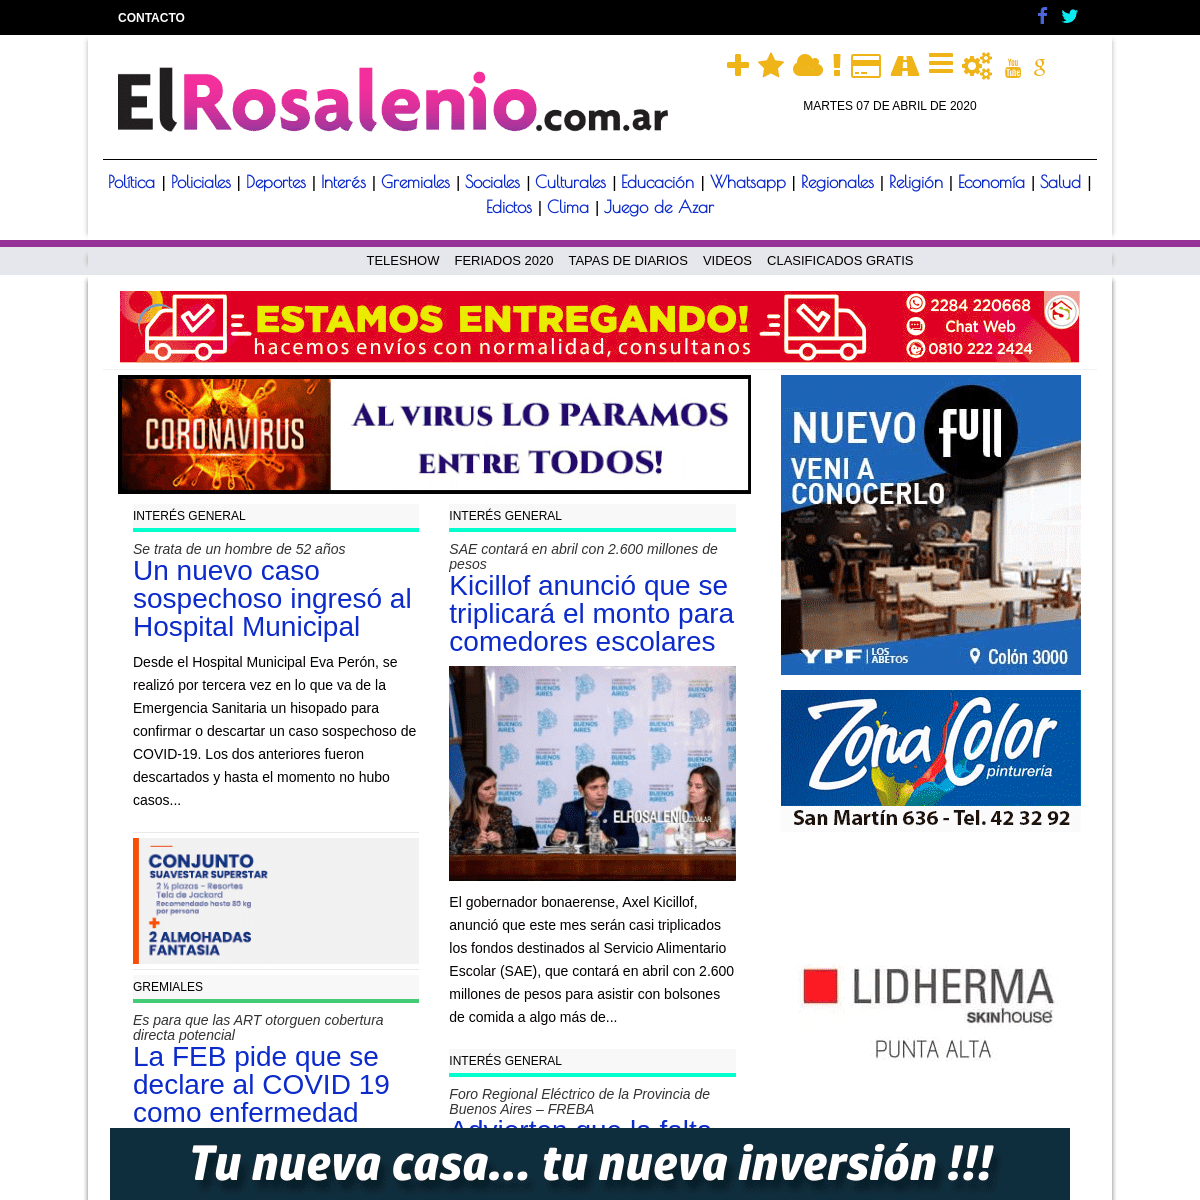 A complete backup of elrosalenio.com.ar